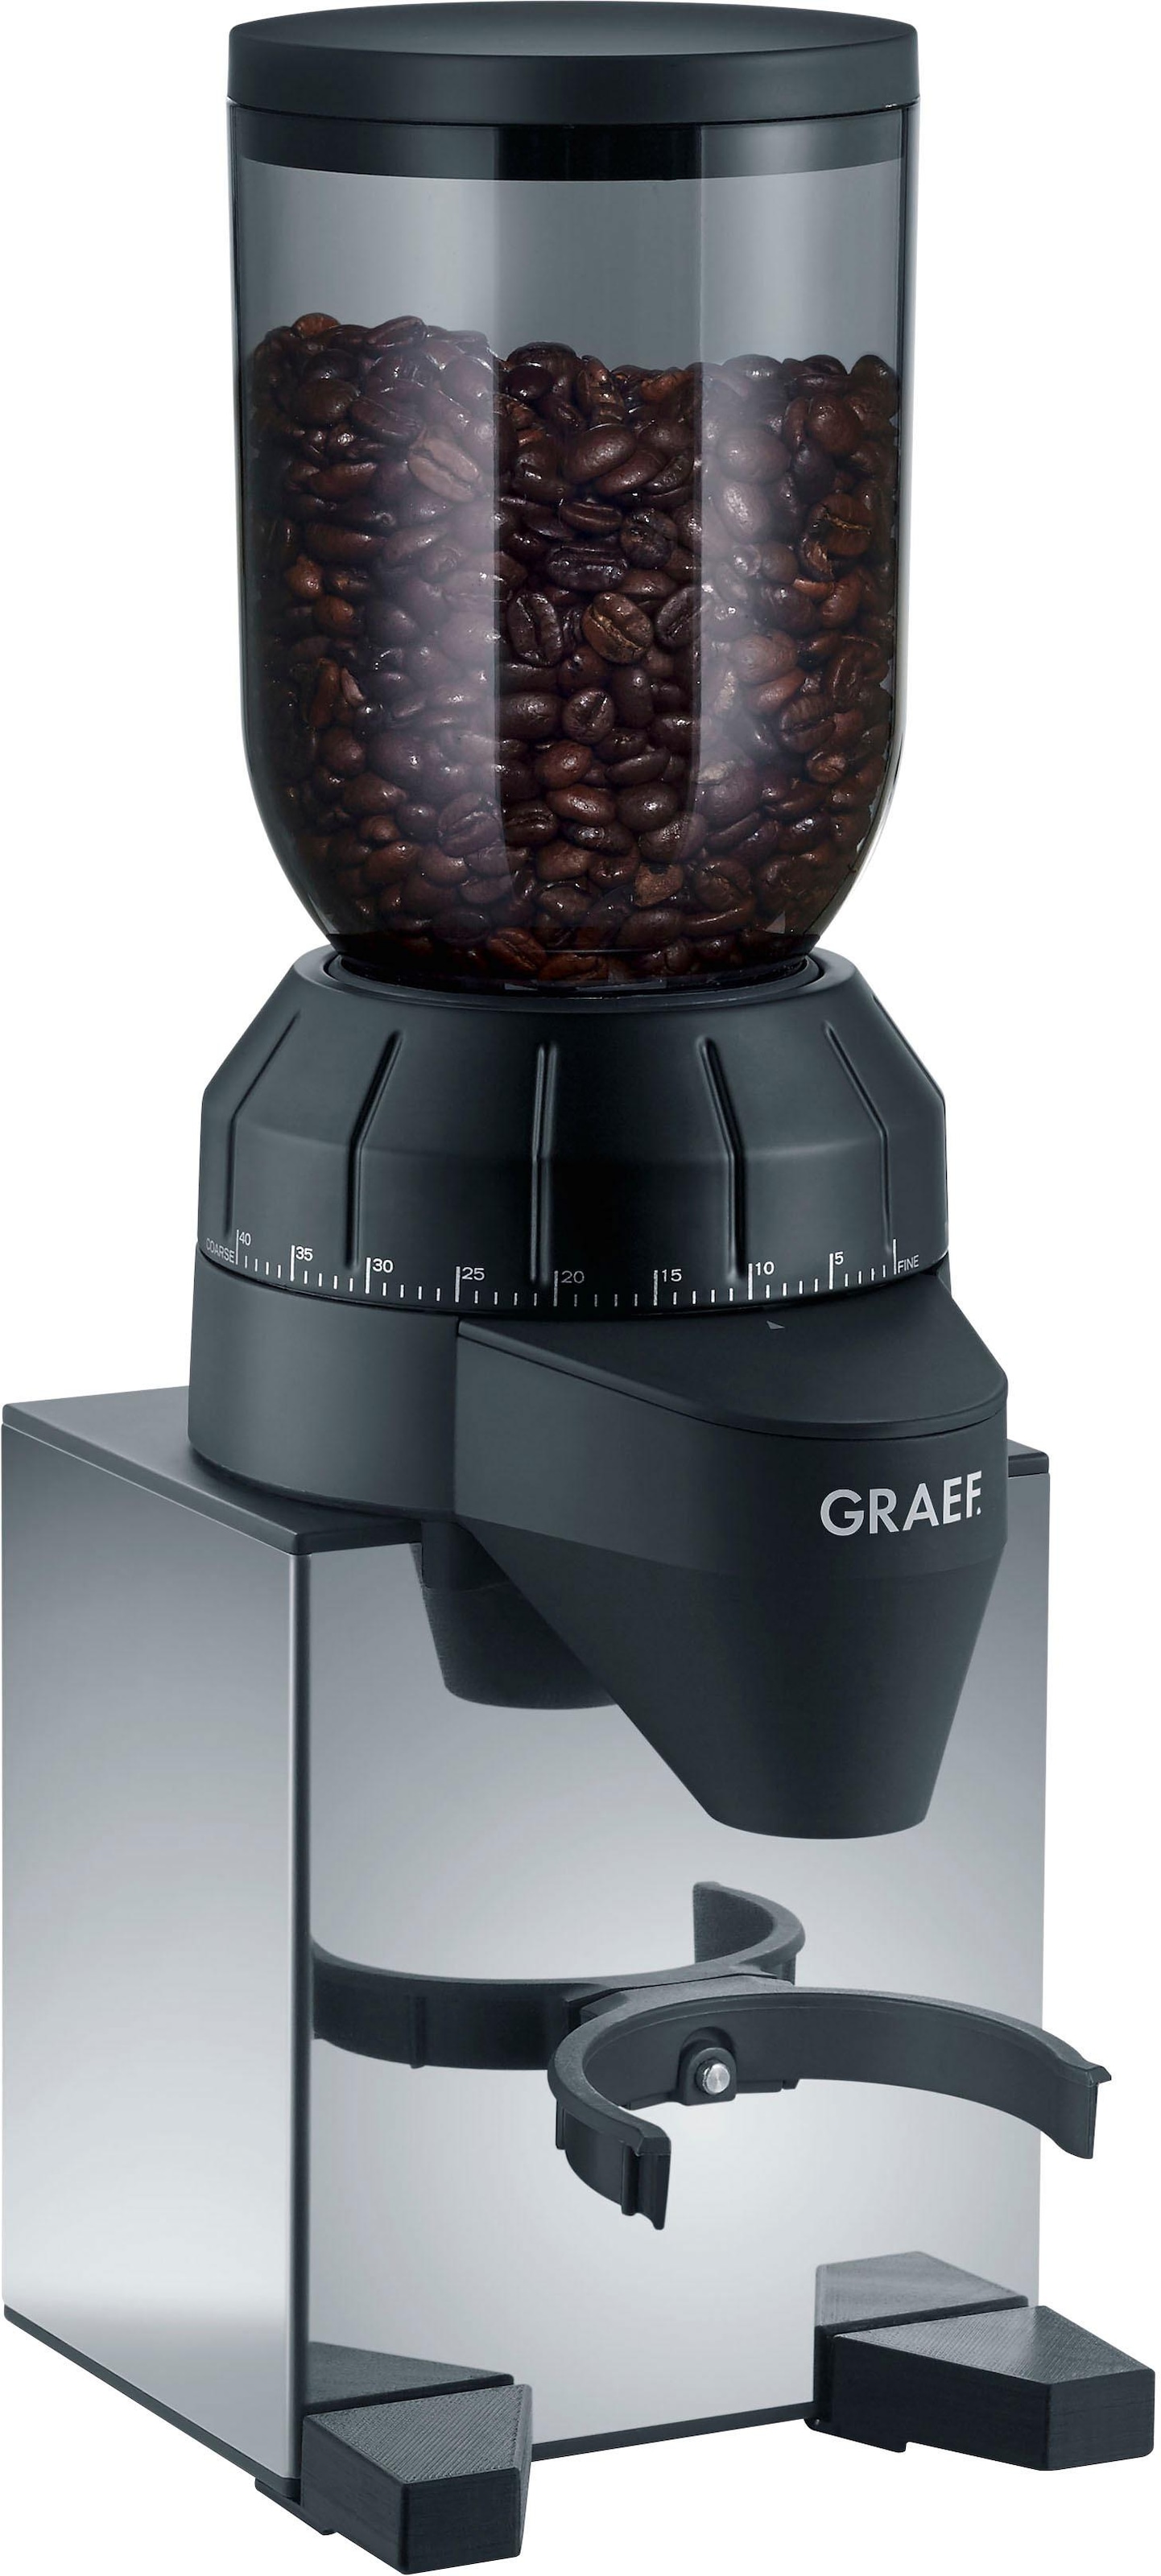 Graef Kaffeemühle »CM 820«, 128 W, Kegelmahlwerk, 250 g Bohnenbehälter, Edelstahl